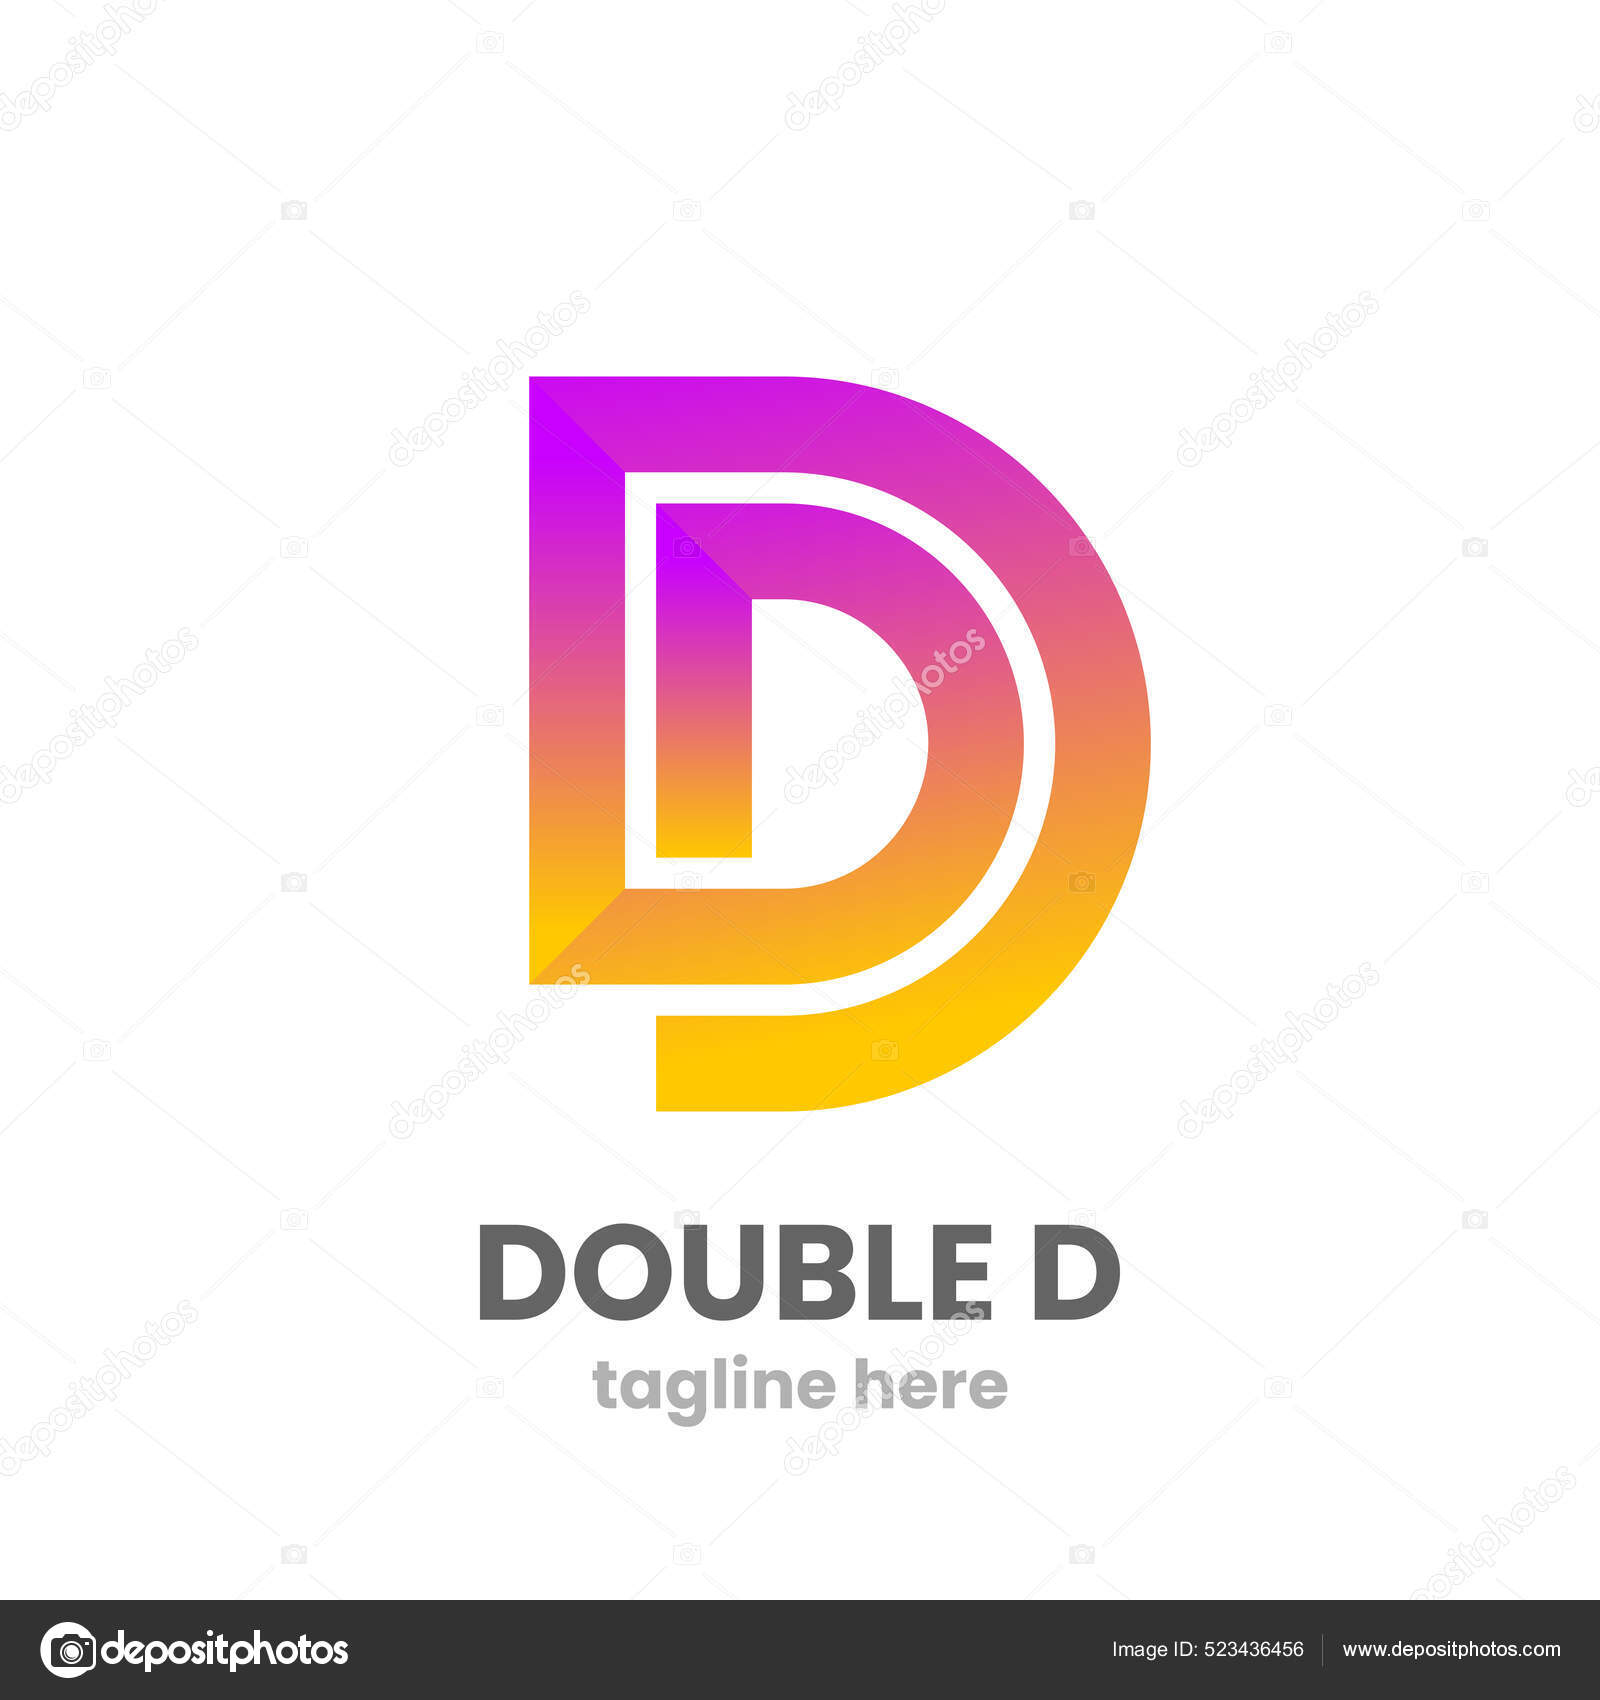 https://st.depositphotos.com/2107825/52343/v/1600/depositphotos_523436456-stock-illustration-double-logo-design-template-abstract.jpg